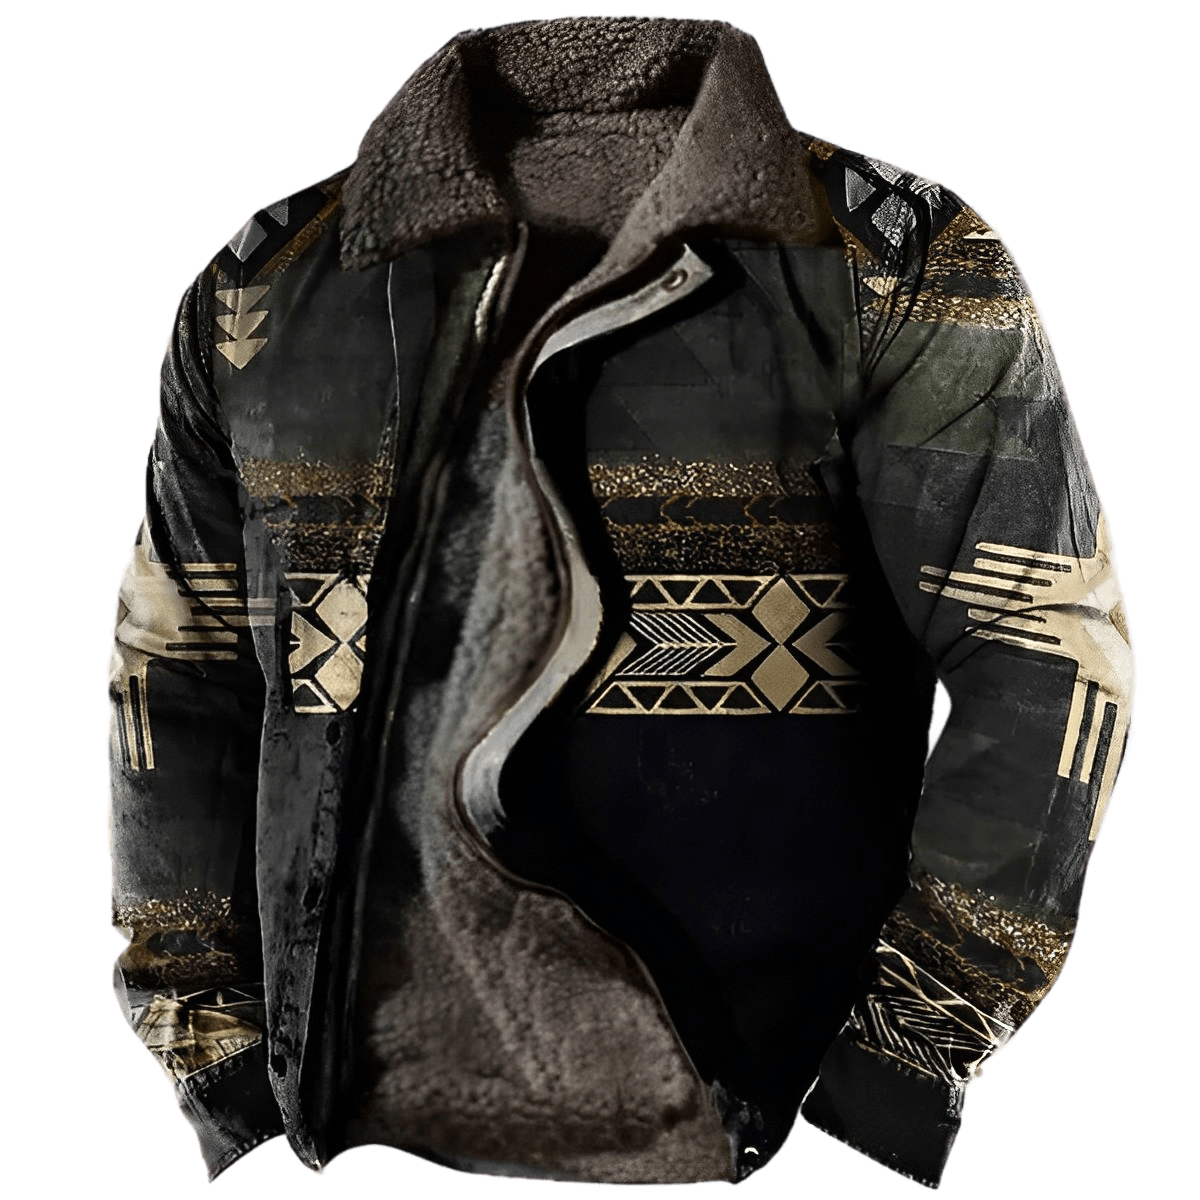 Men's Retro Ethnic Print Fleece Zipper Tactical Shirt Jacket